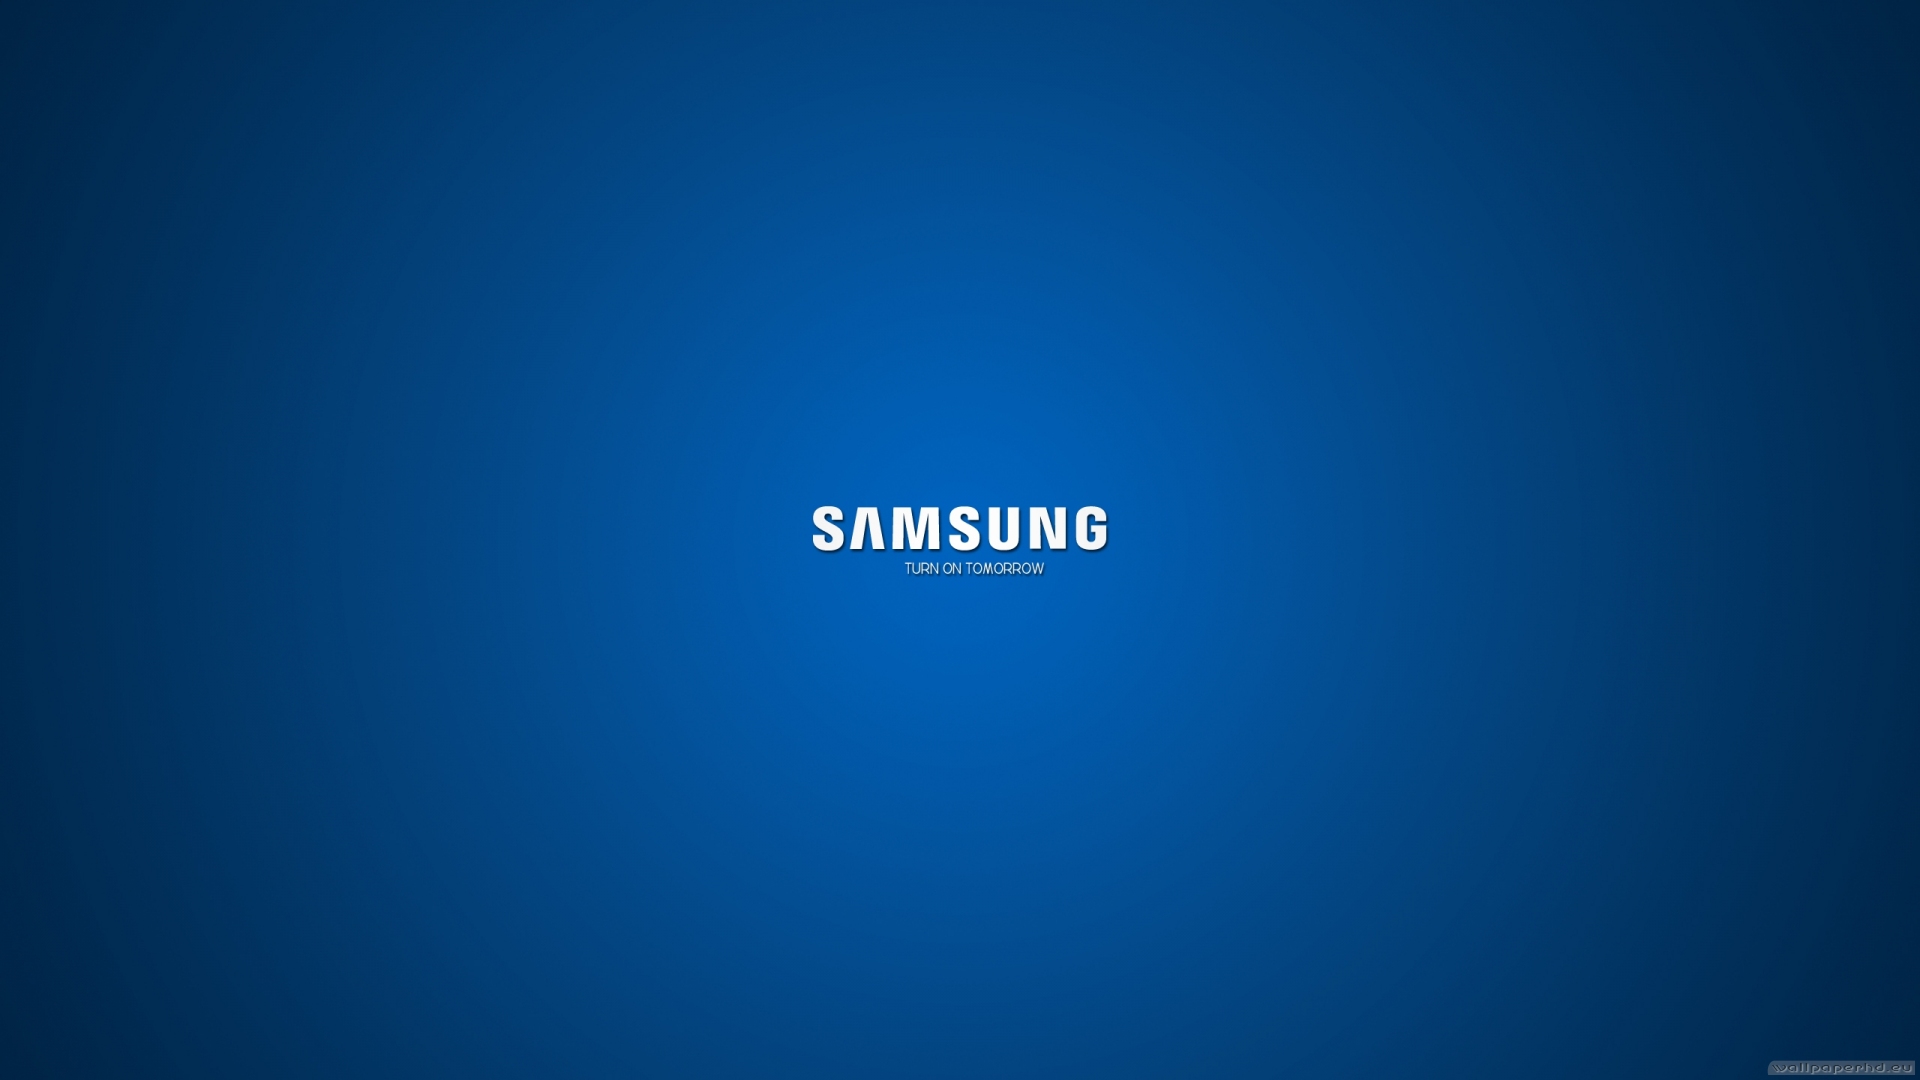 Samsung Galaxy Note Wallpaper Hd Beautiful beach hd wallpapers